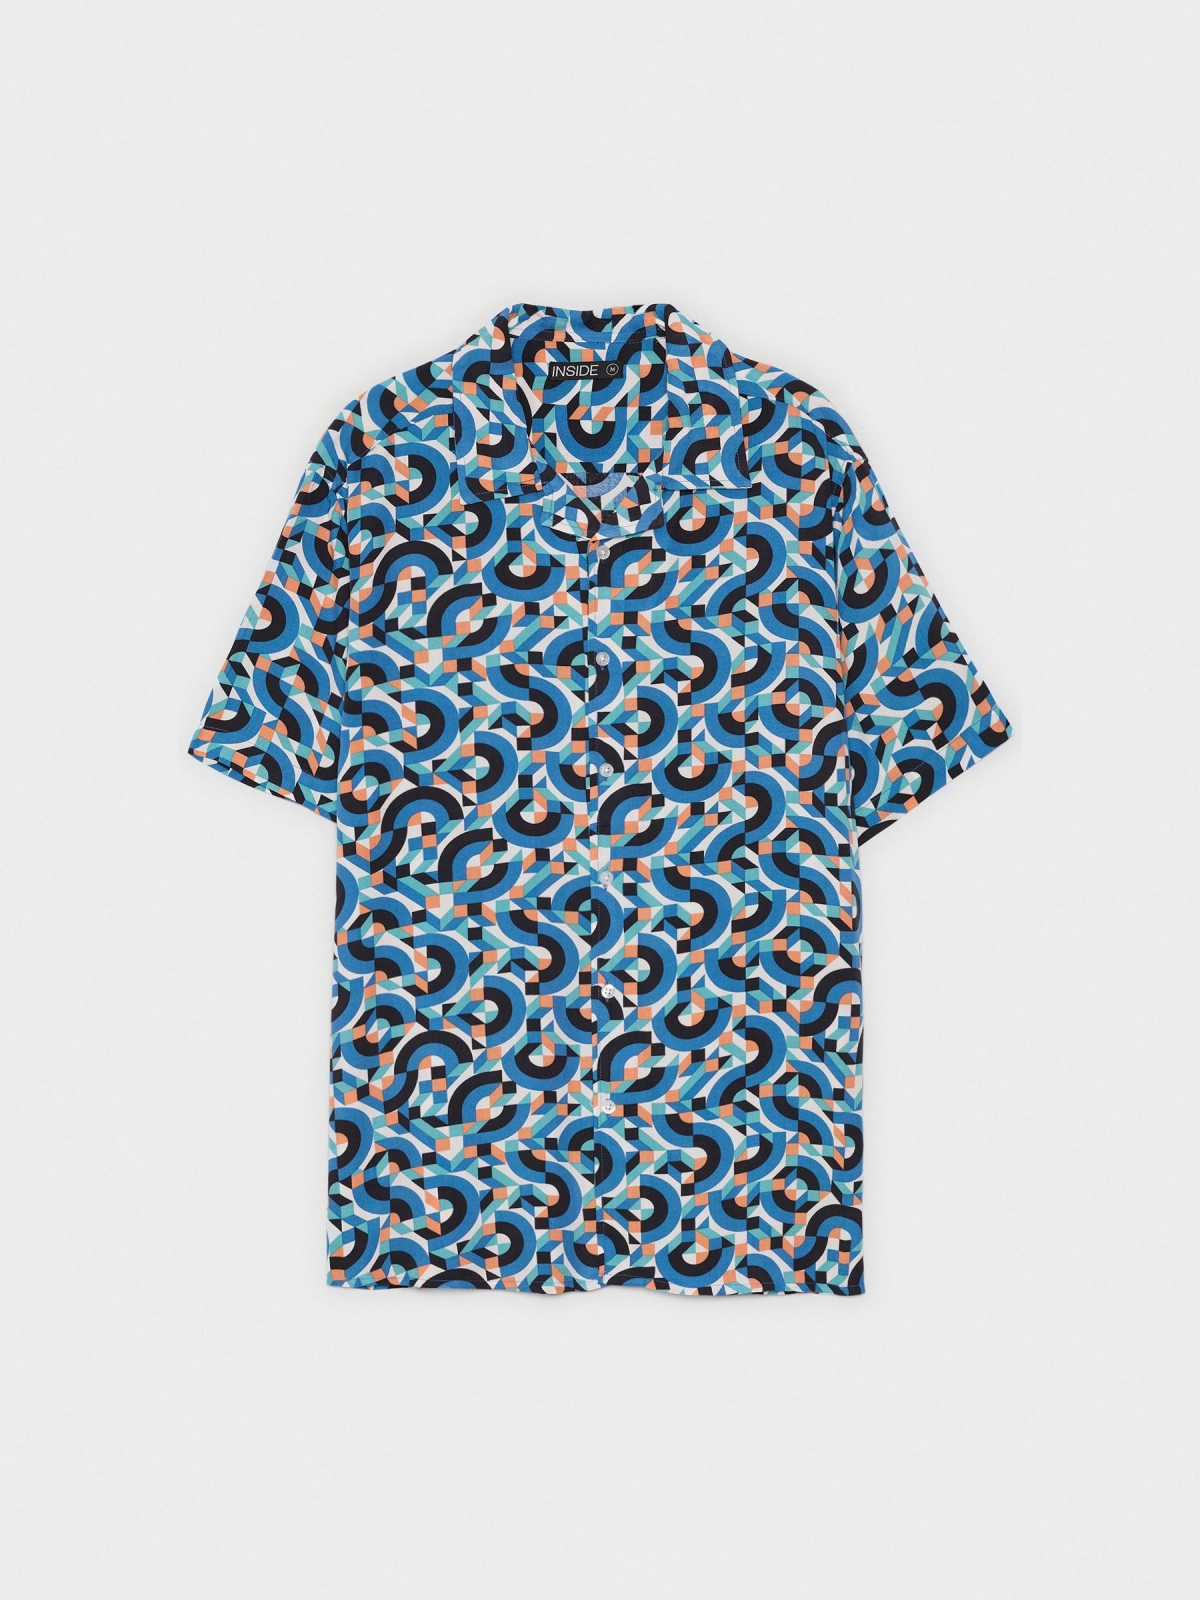  Camisa print geométrico azul